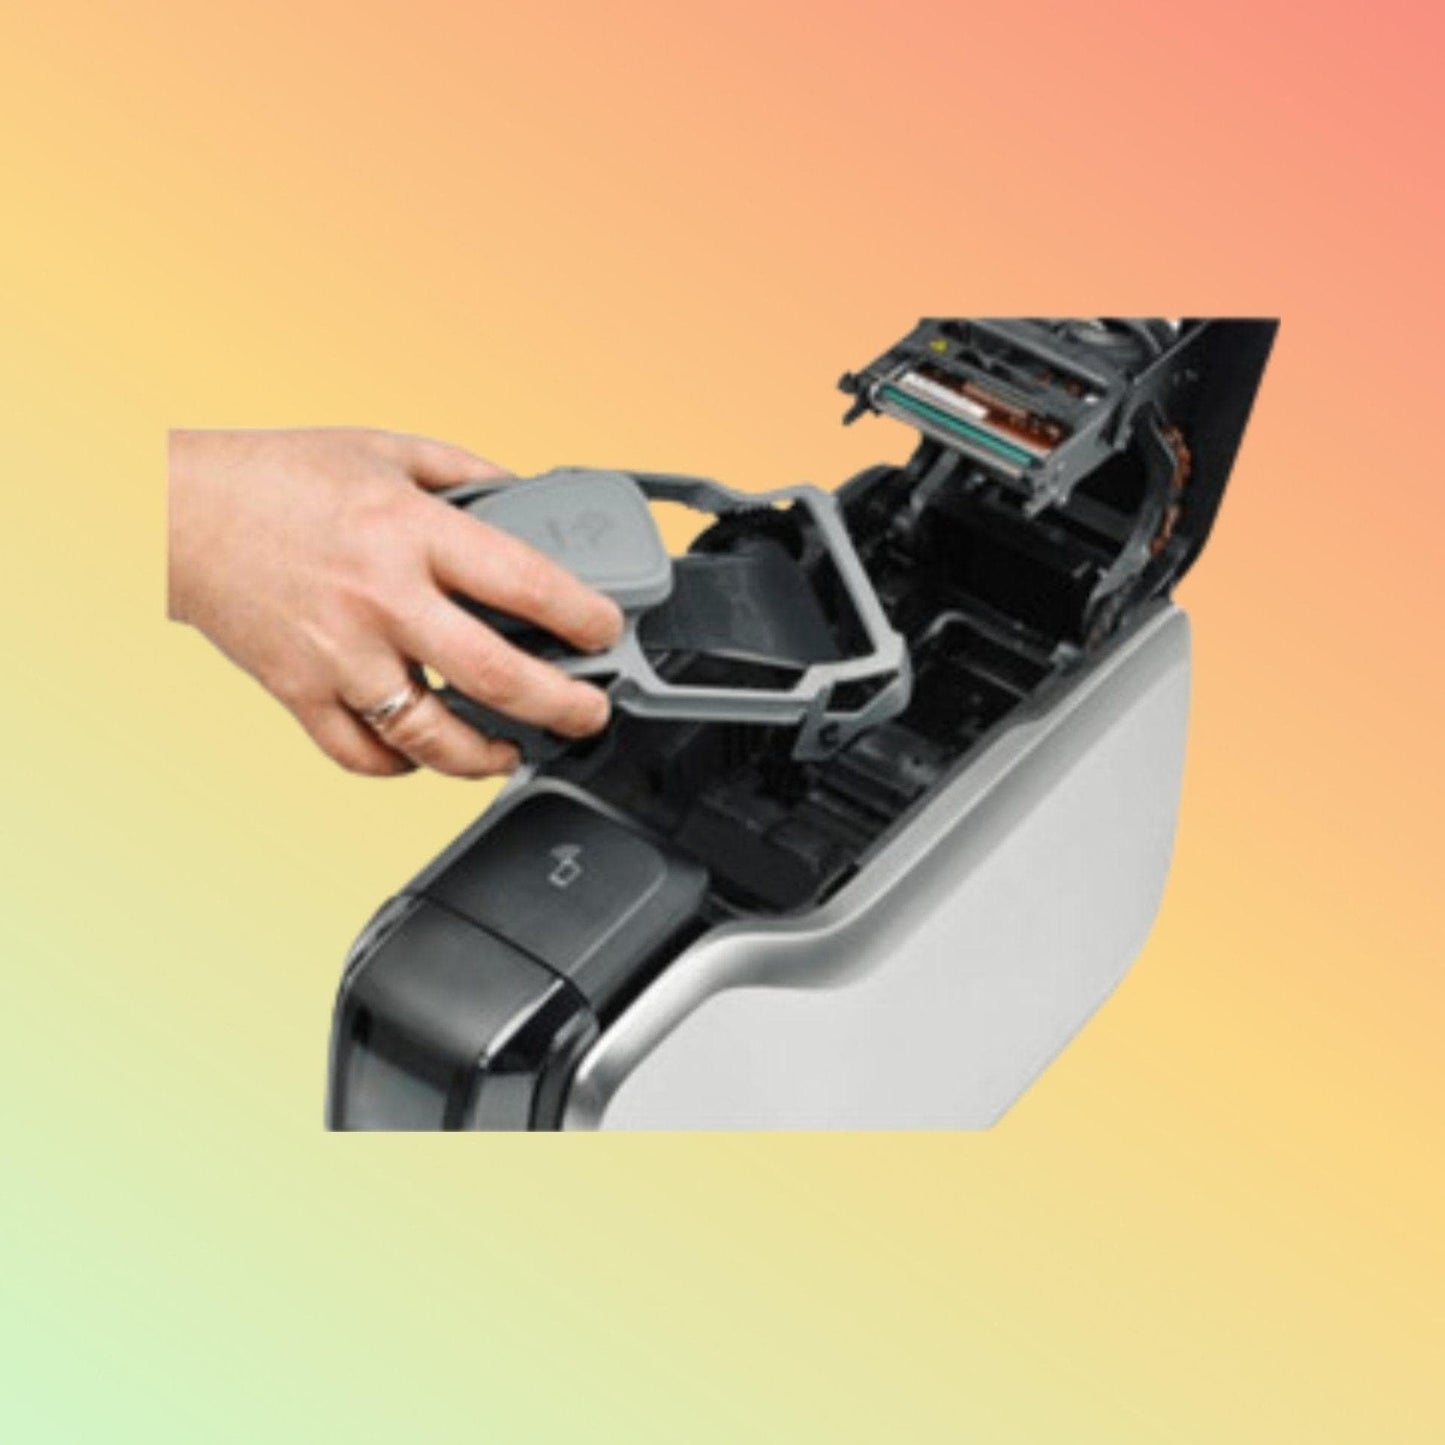 Idcard Printer - Zebra ZC300 Card Printer - Neotech